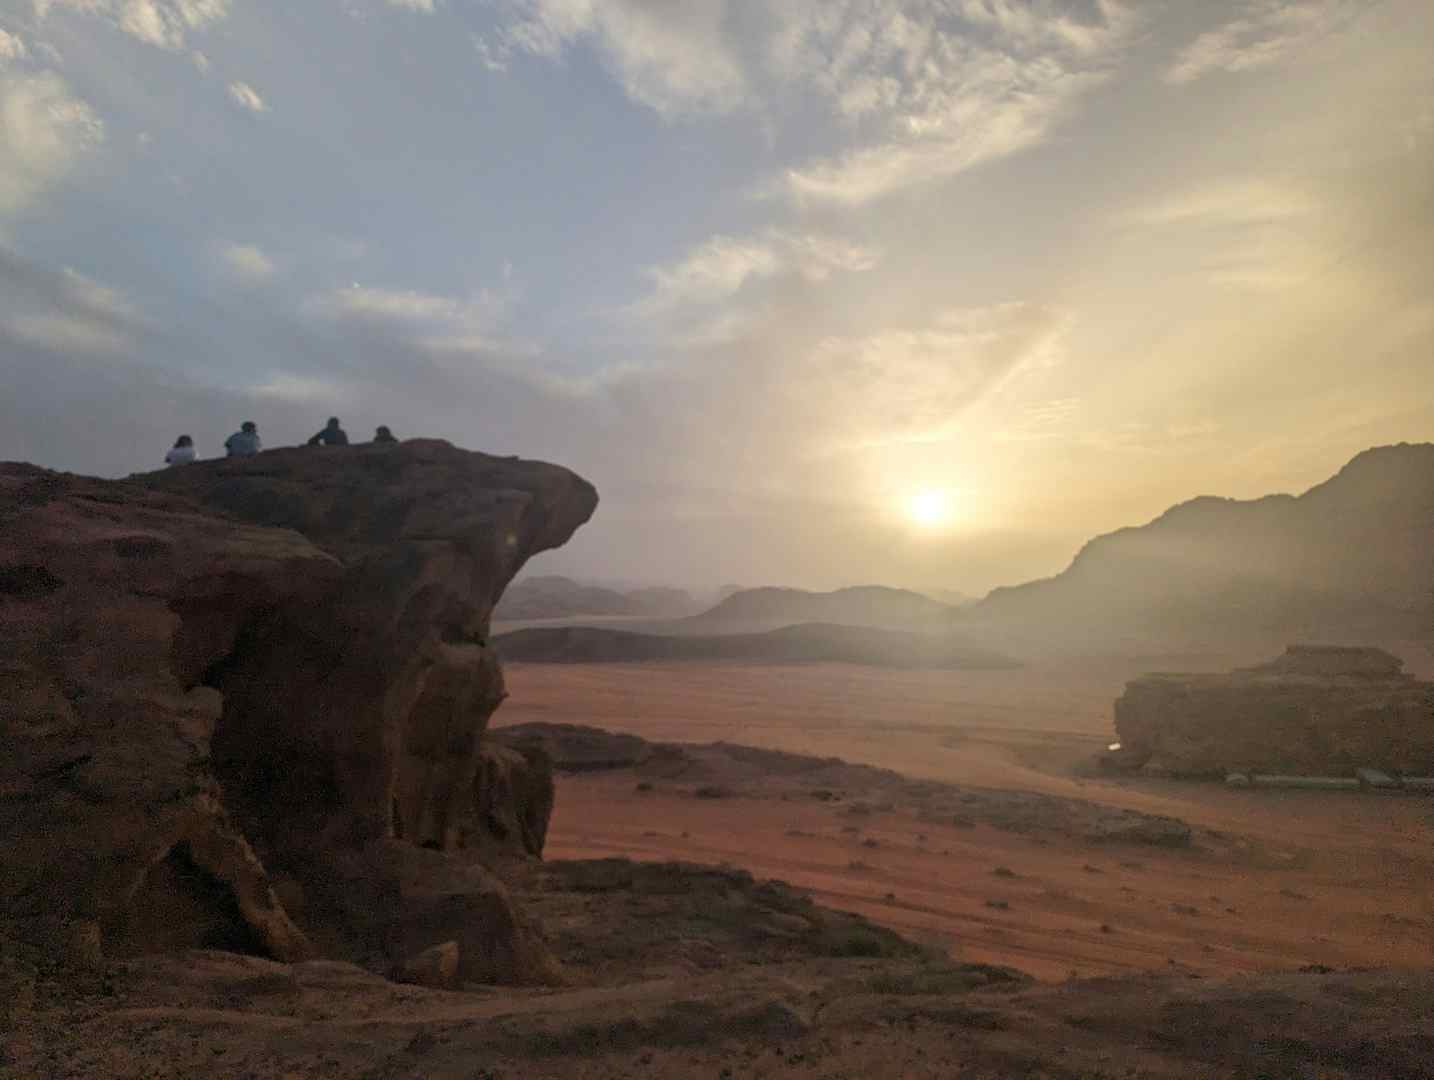 Incredible desert adventure